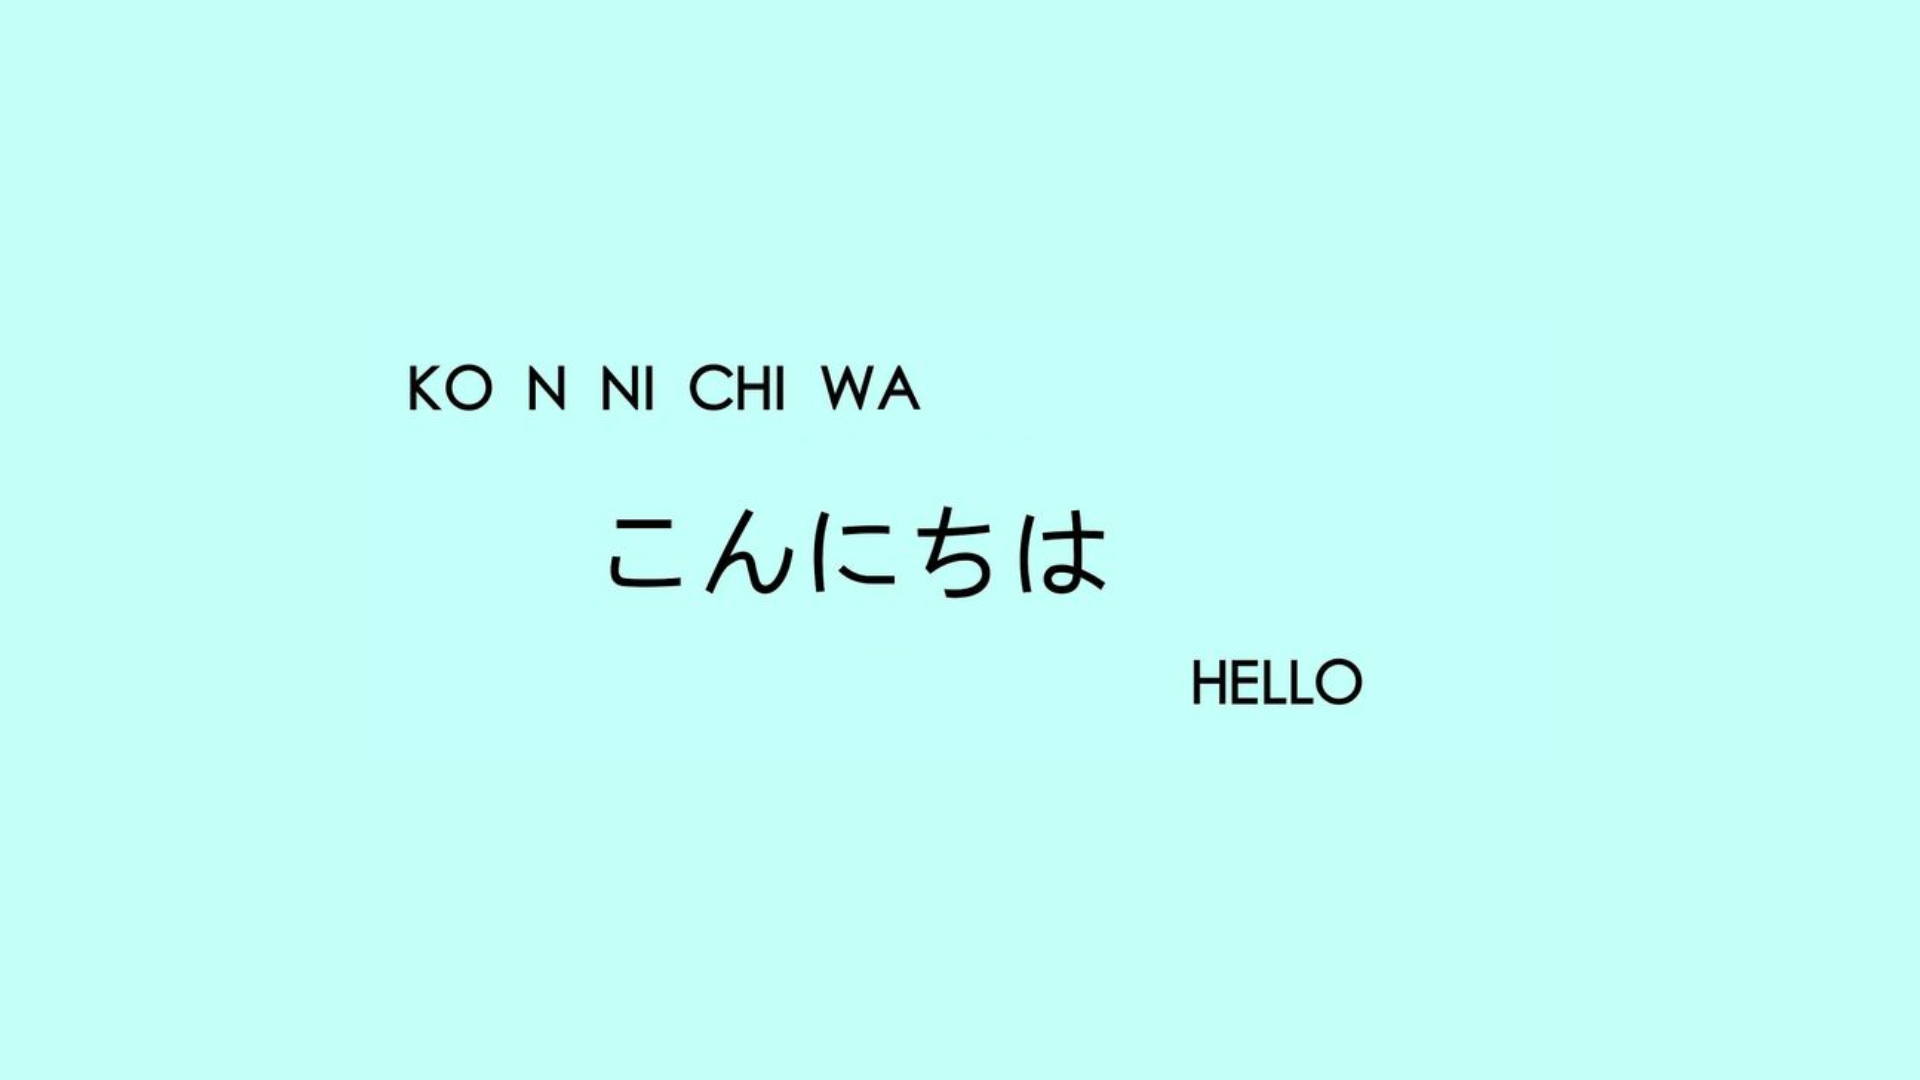 Translate Japanese From Image